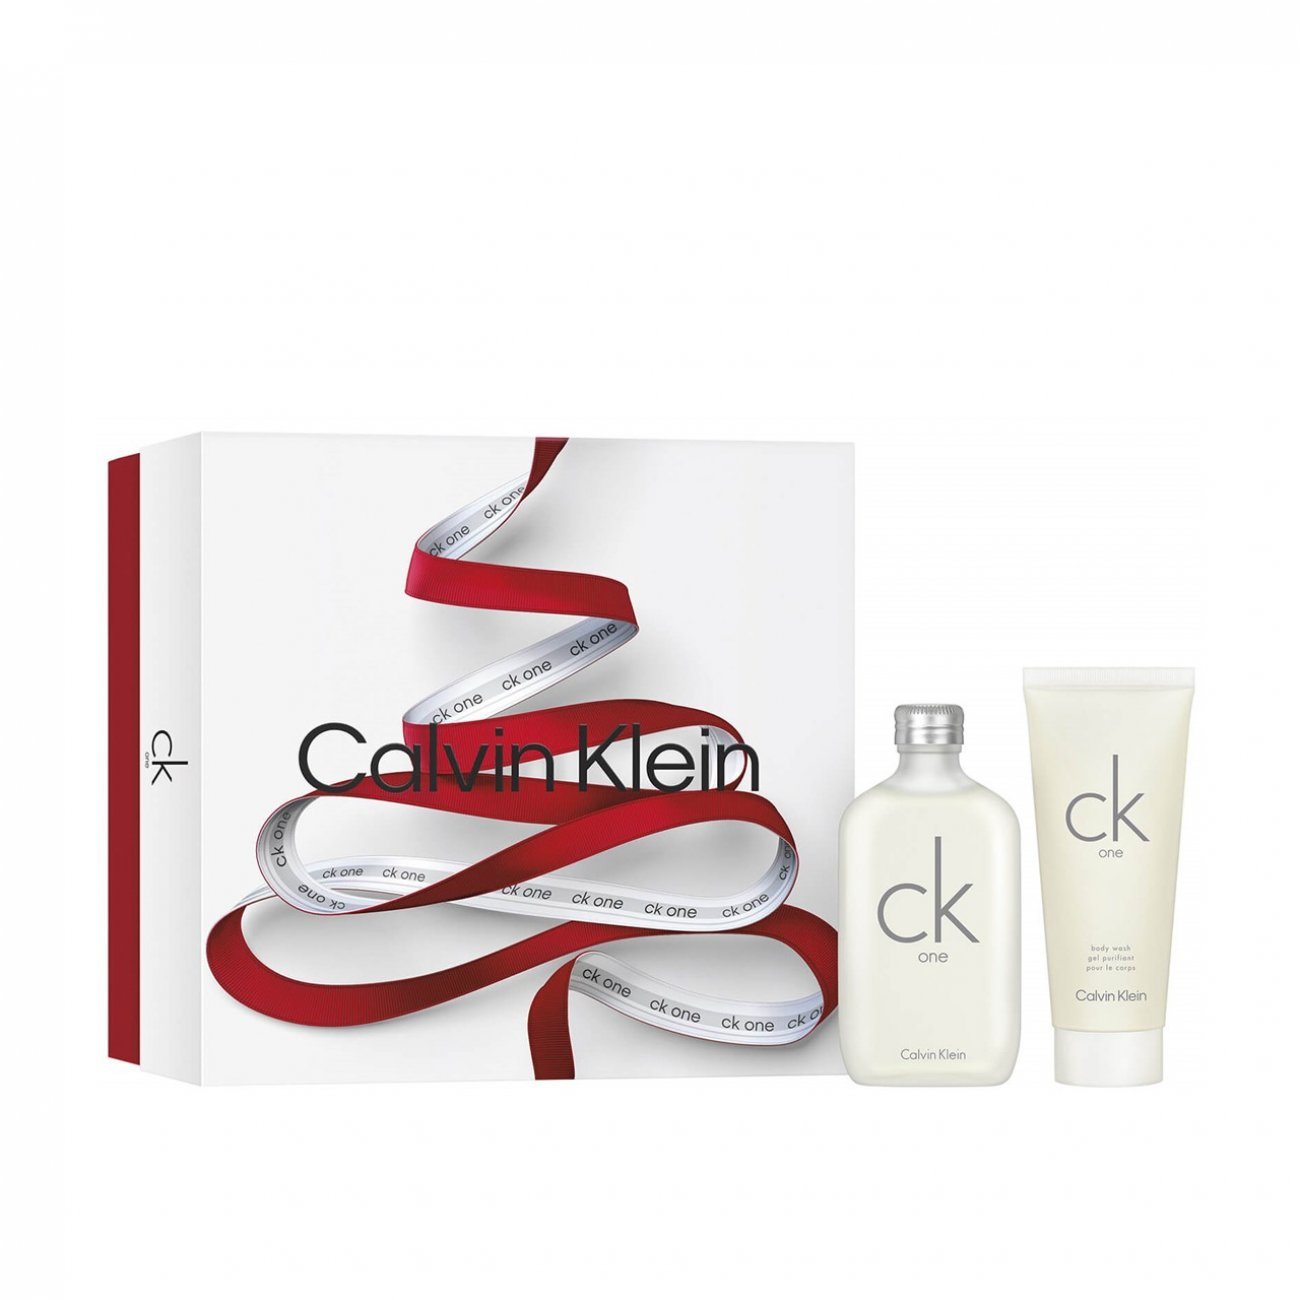 Buy GIFT SET:Calvin Klein CK One Eau de Toilette 200ml Coffret · Turkey